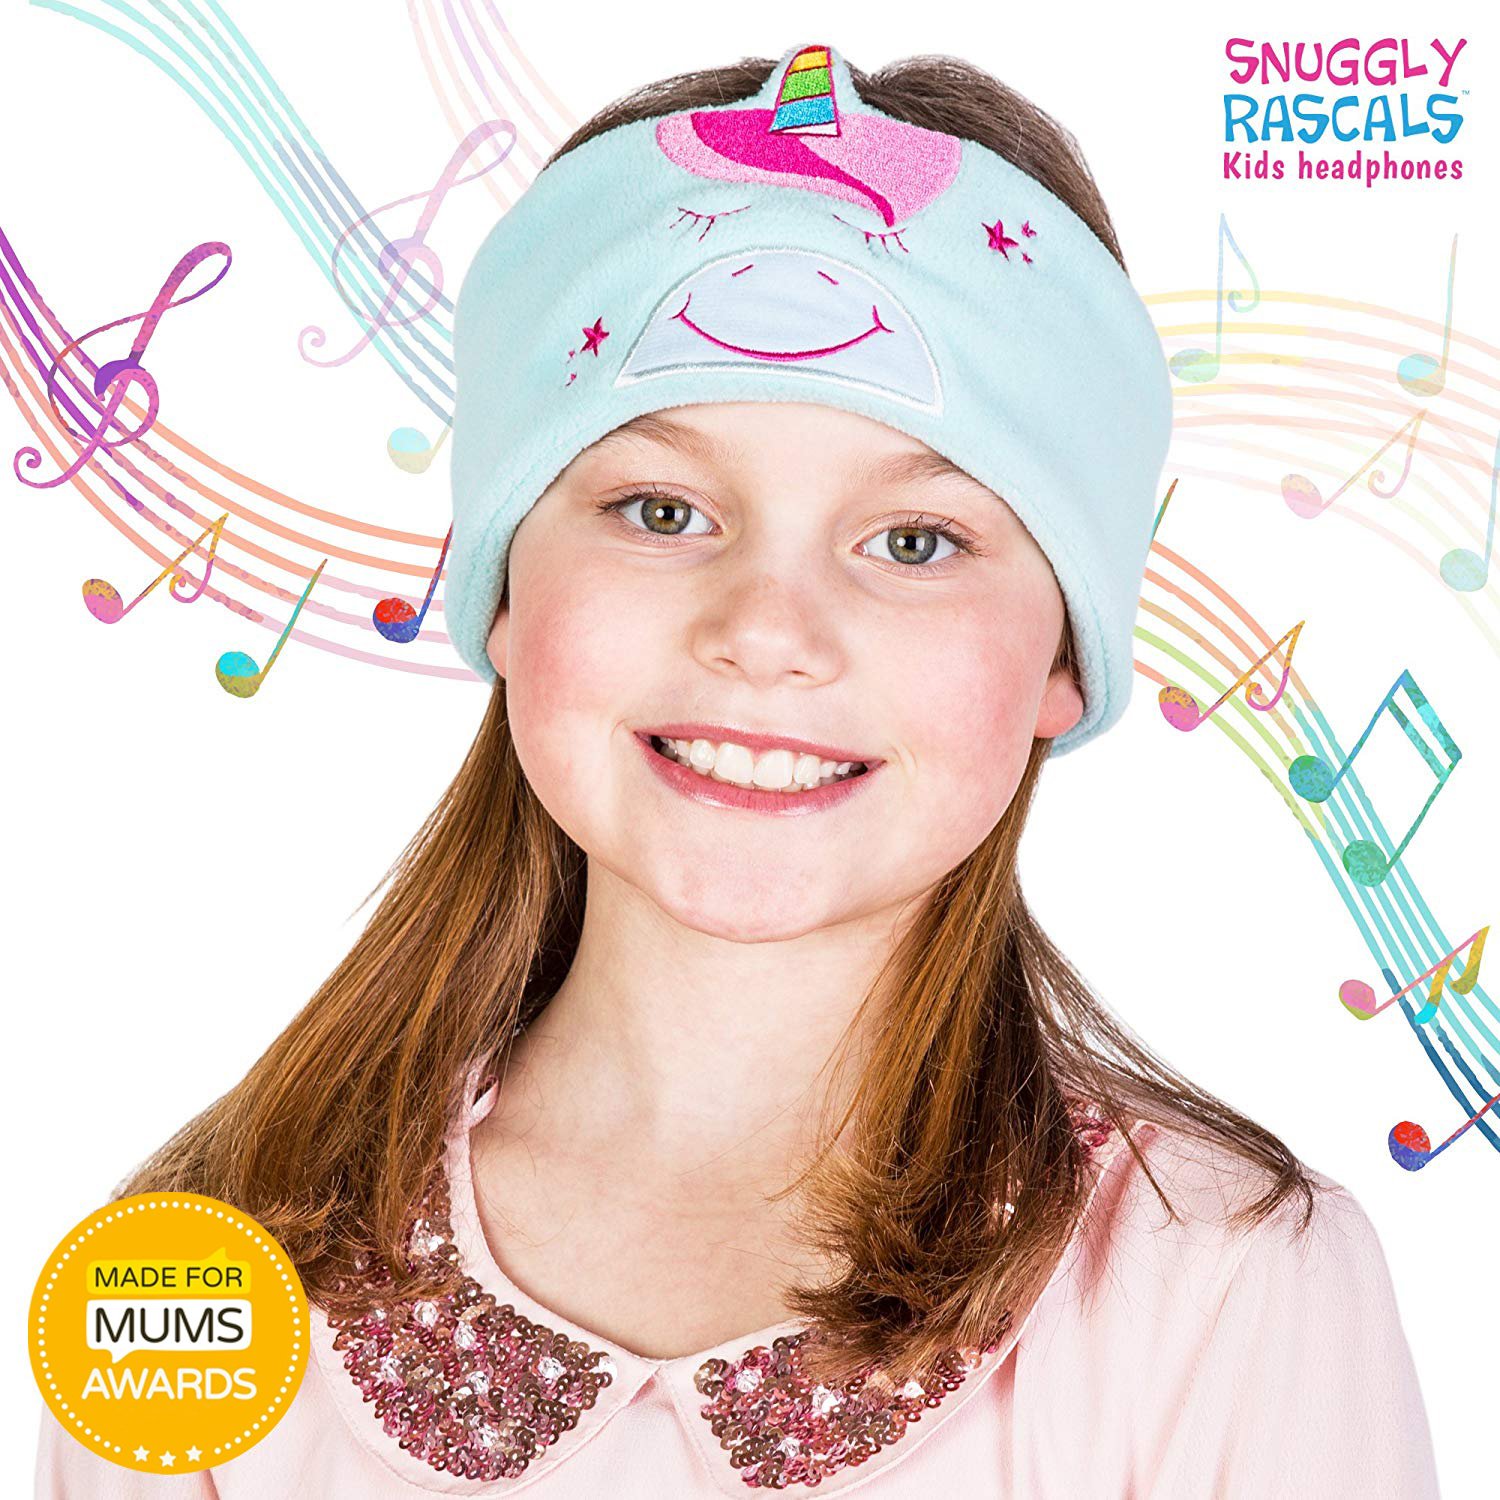 Snuggly Rascals Unicorn Kids Headphones Review